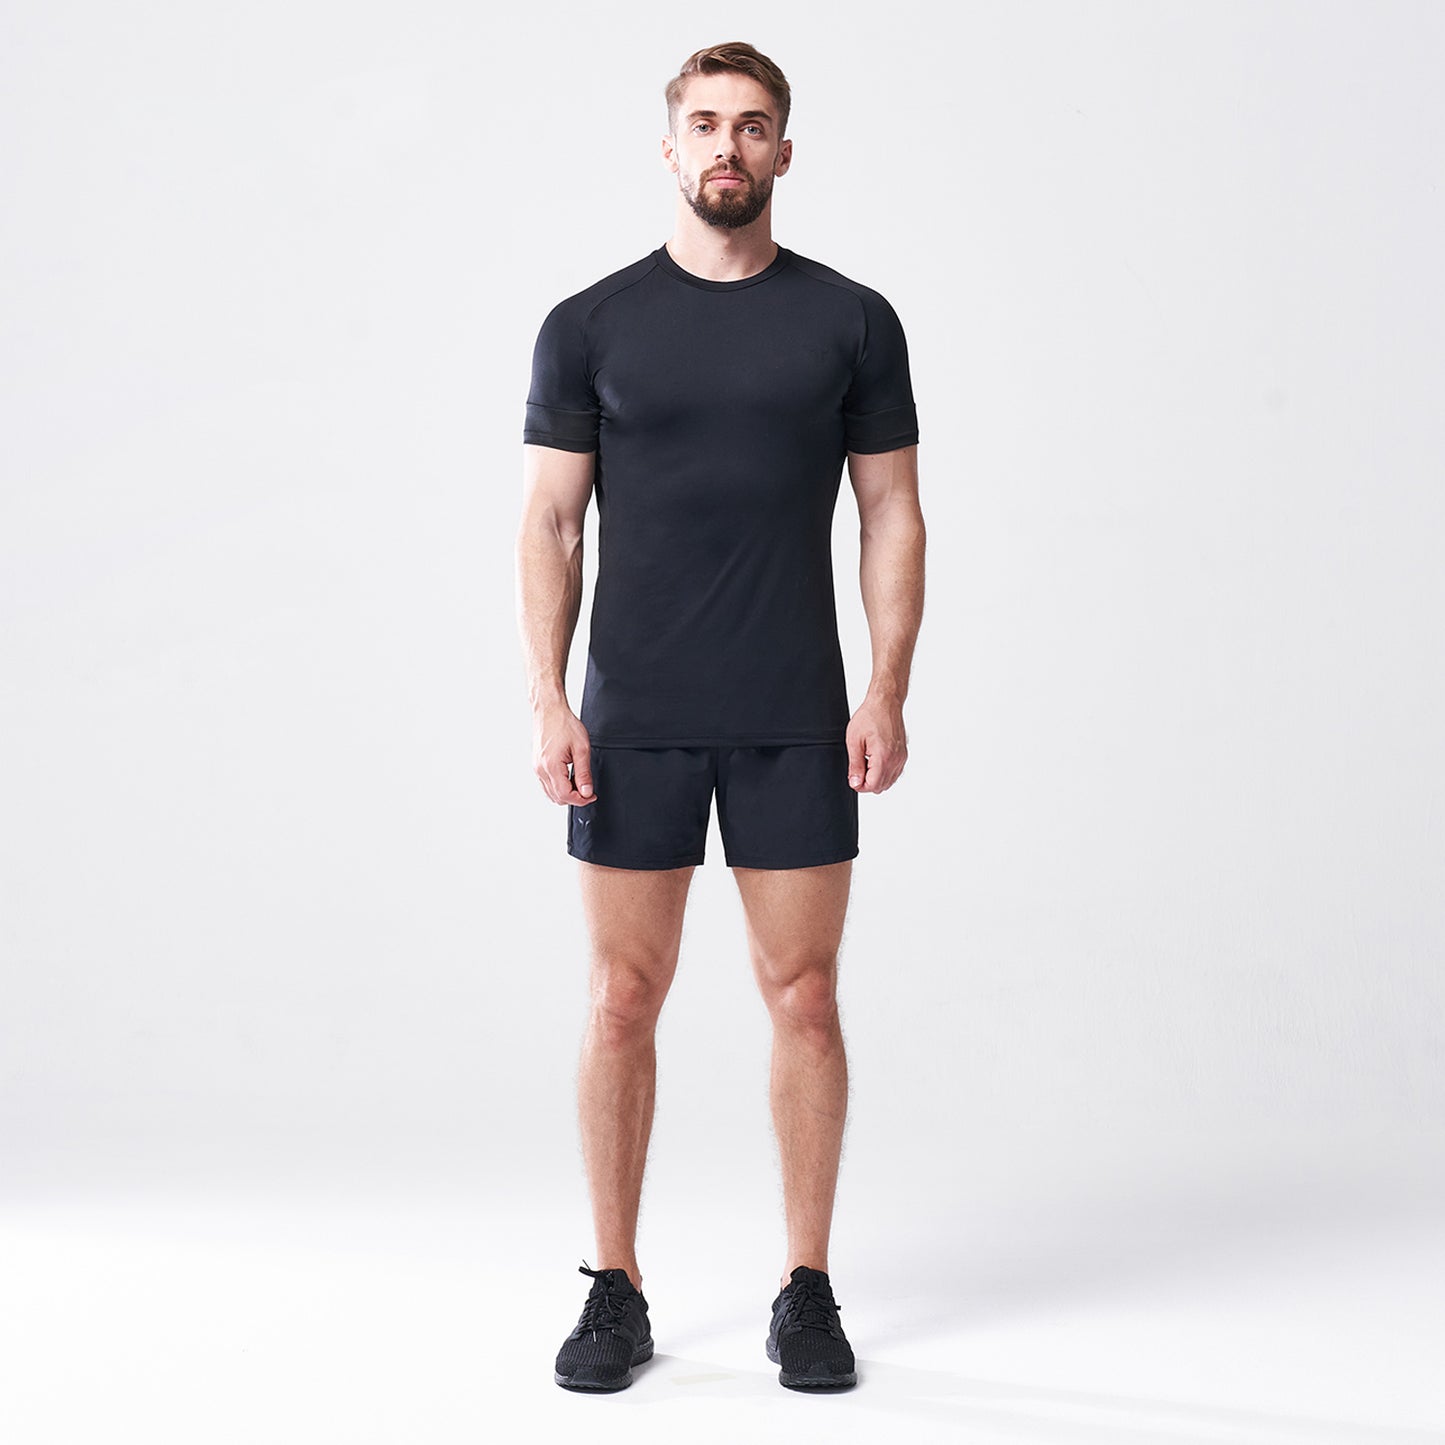 squatwolf-gym-wear-lab360-raglan-performance-tee-black-workout-shirts-for-men